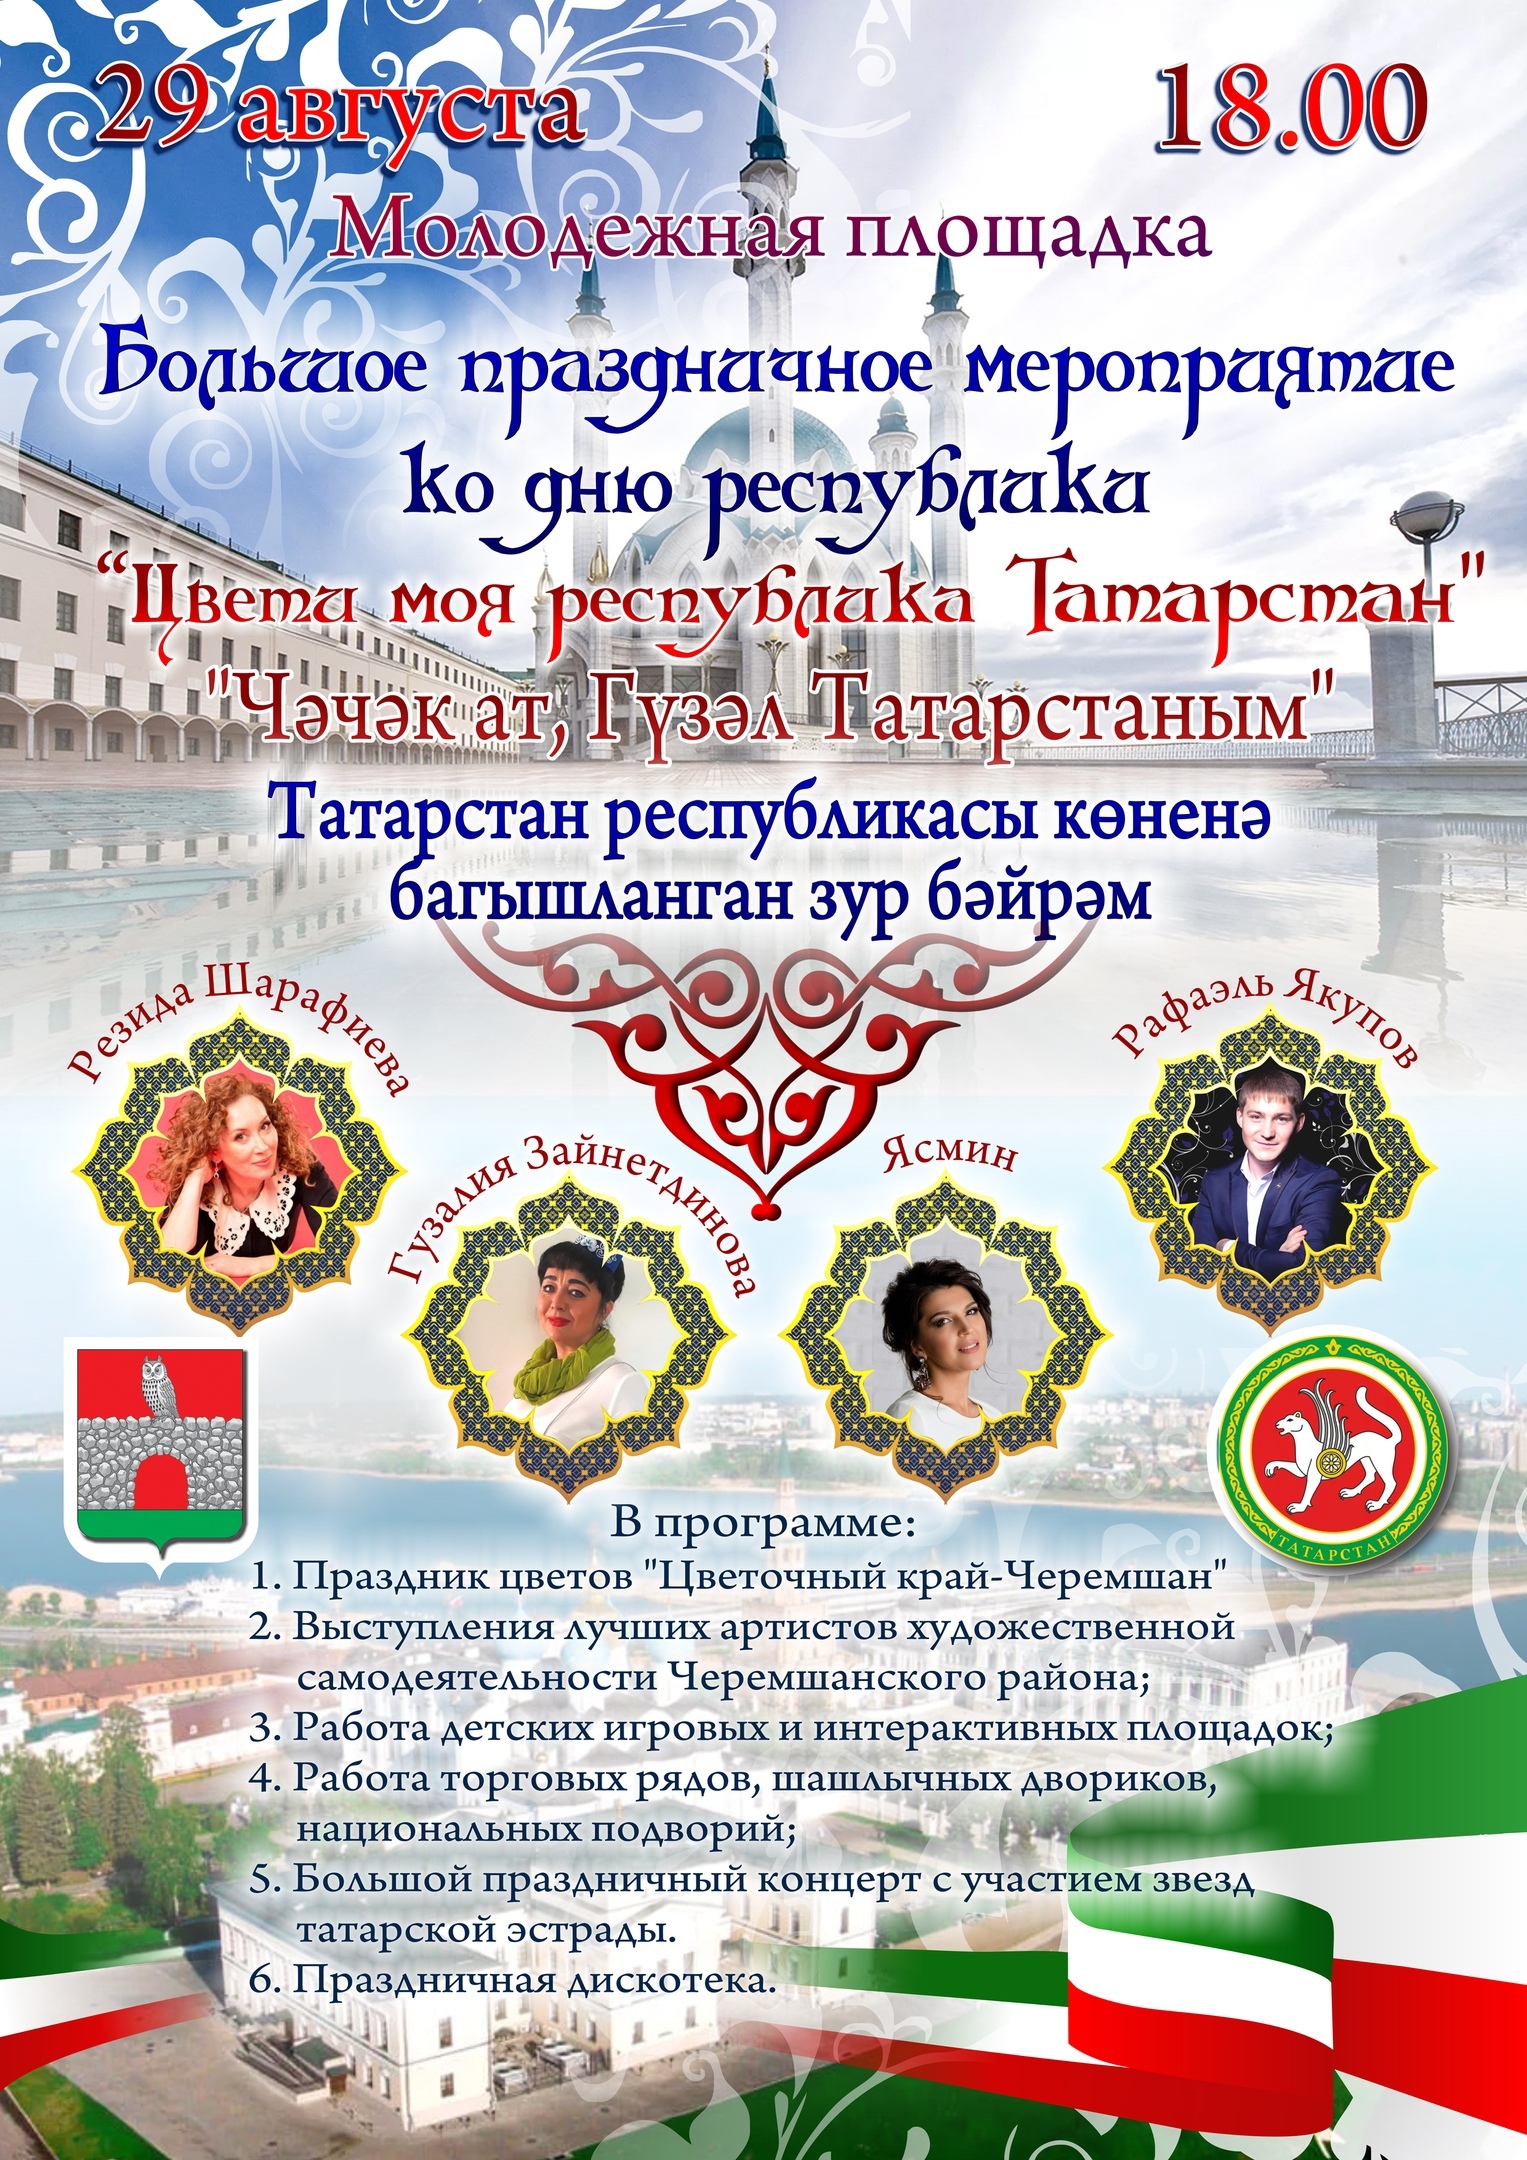 С днем Татарстана поздравления